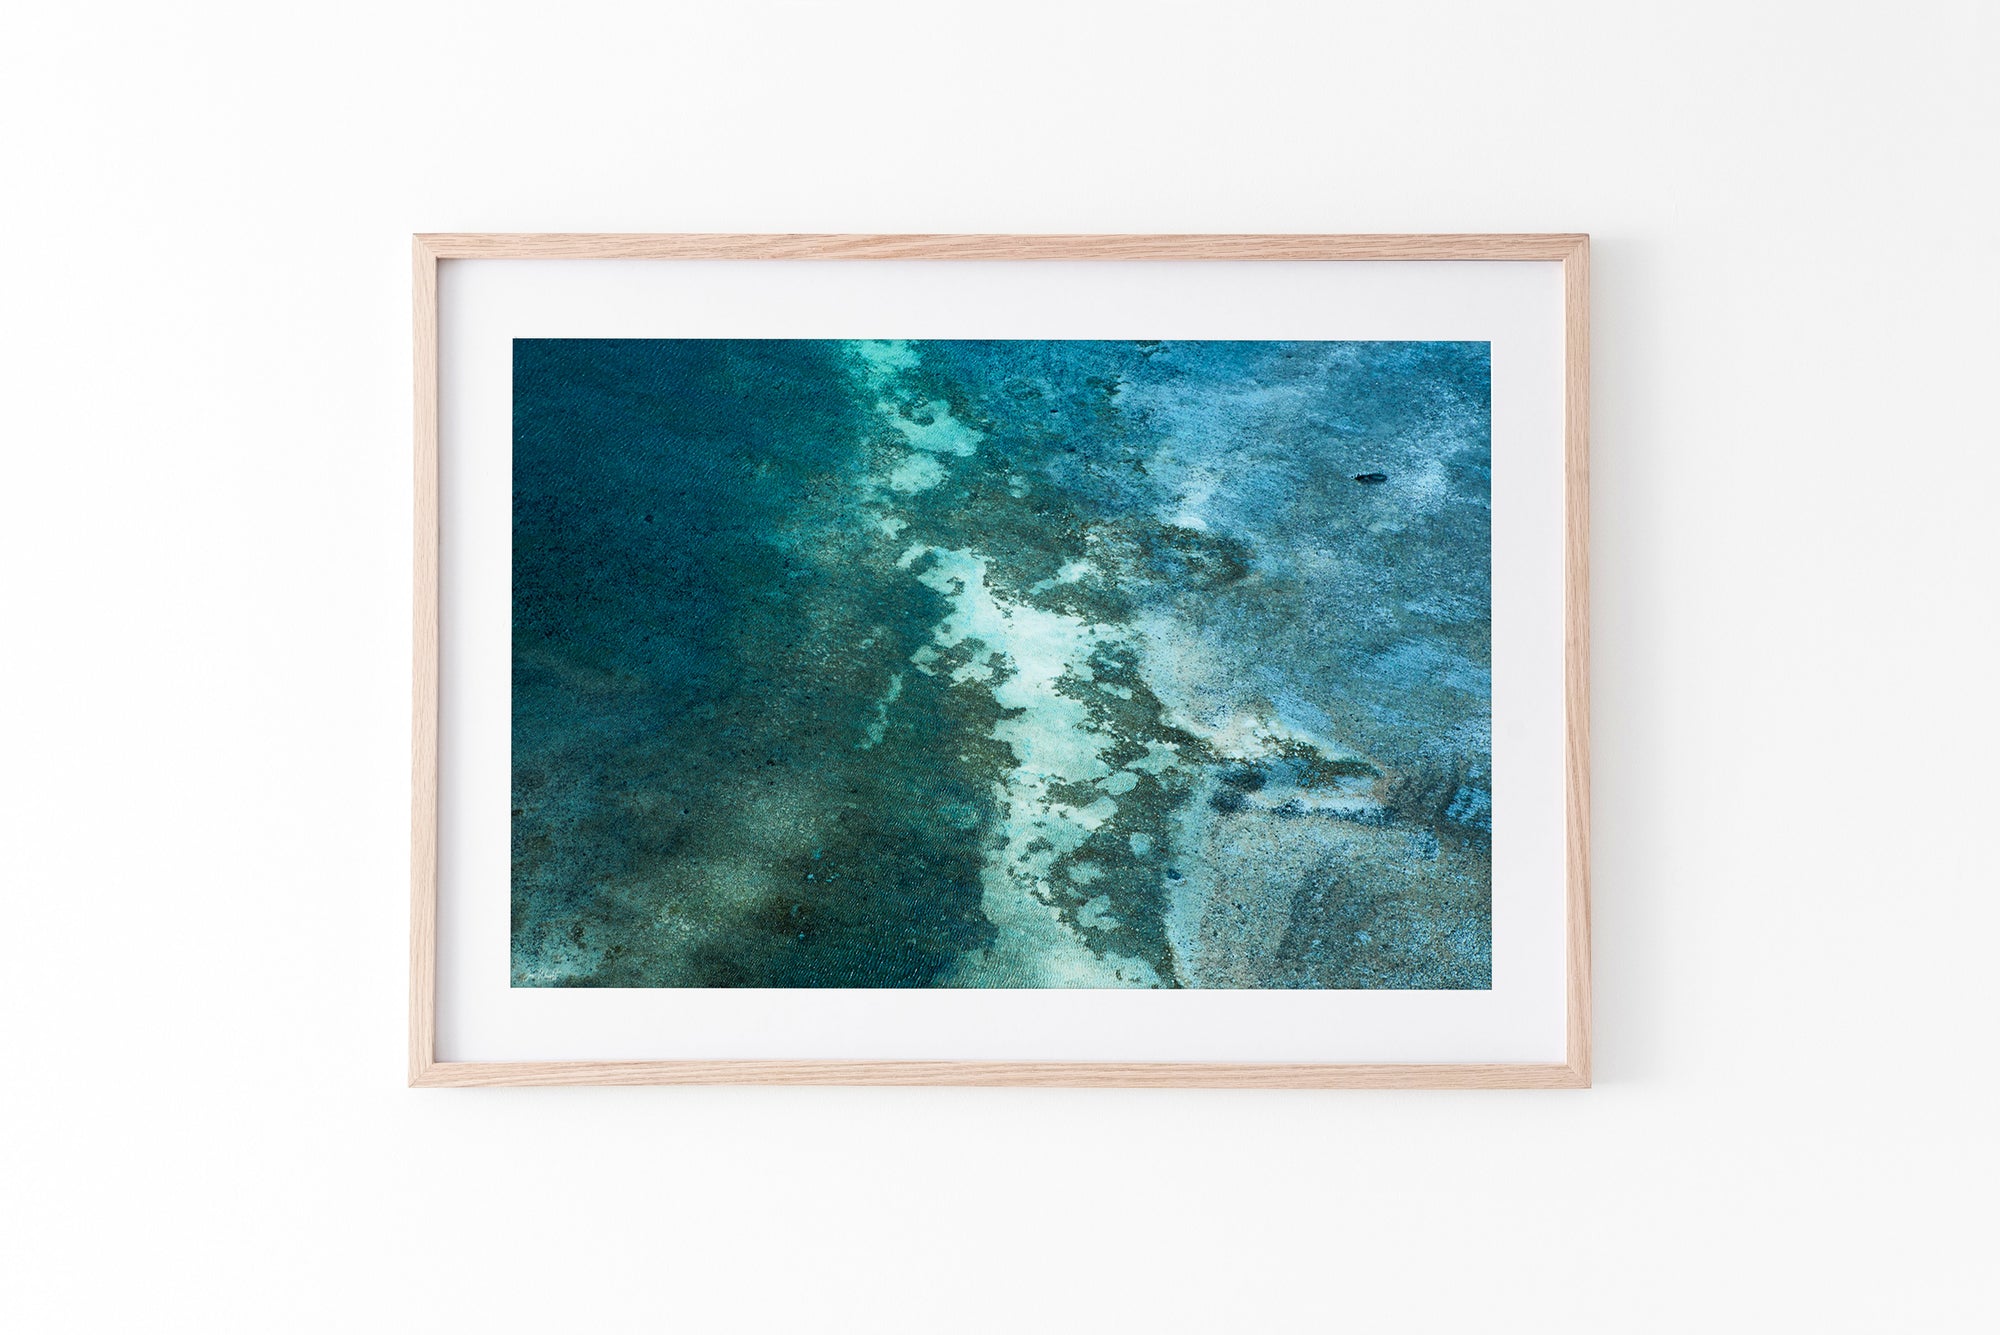 The Reef - Moreton Bay - QLD, Australia